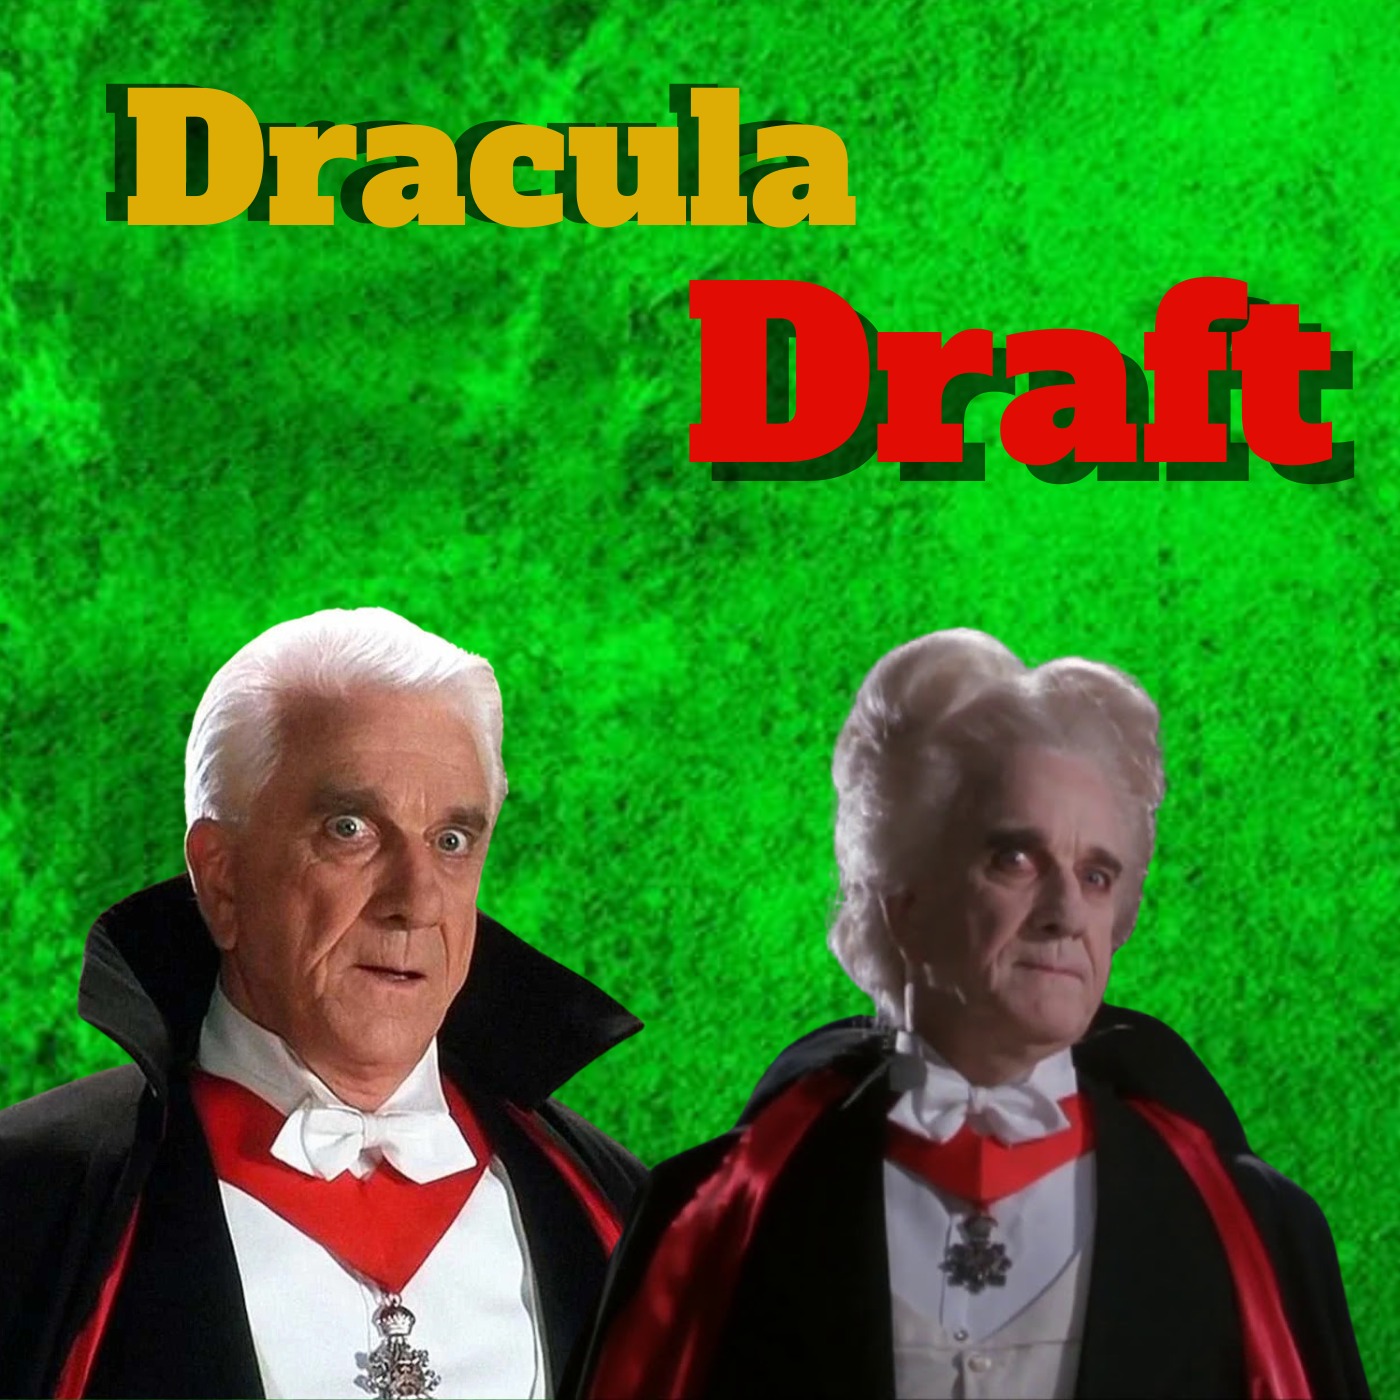 Dracula Vampire League Live Draft Image